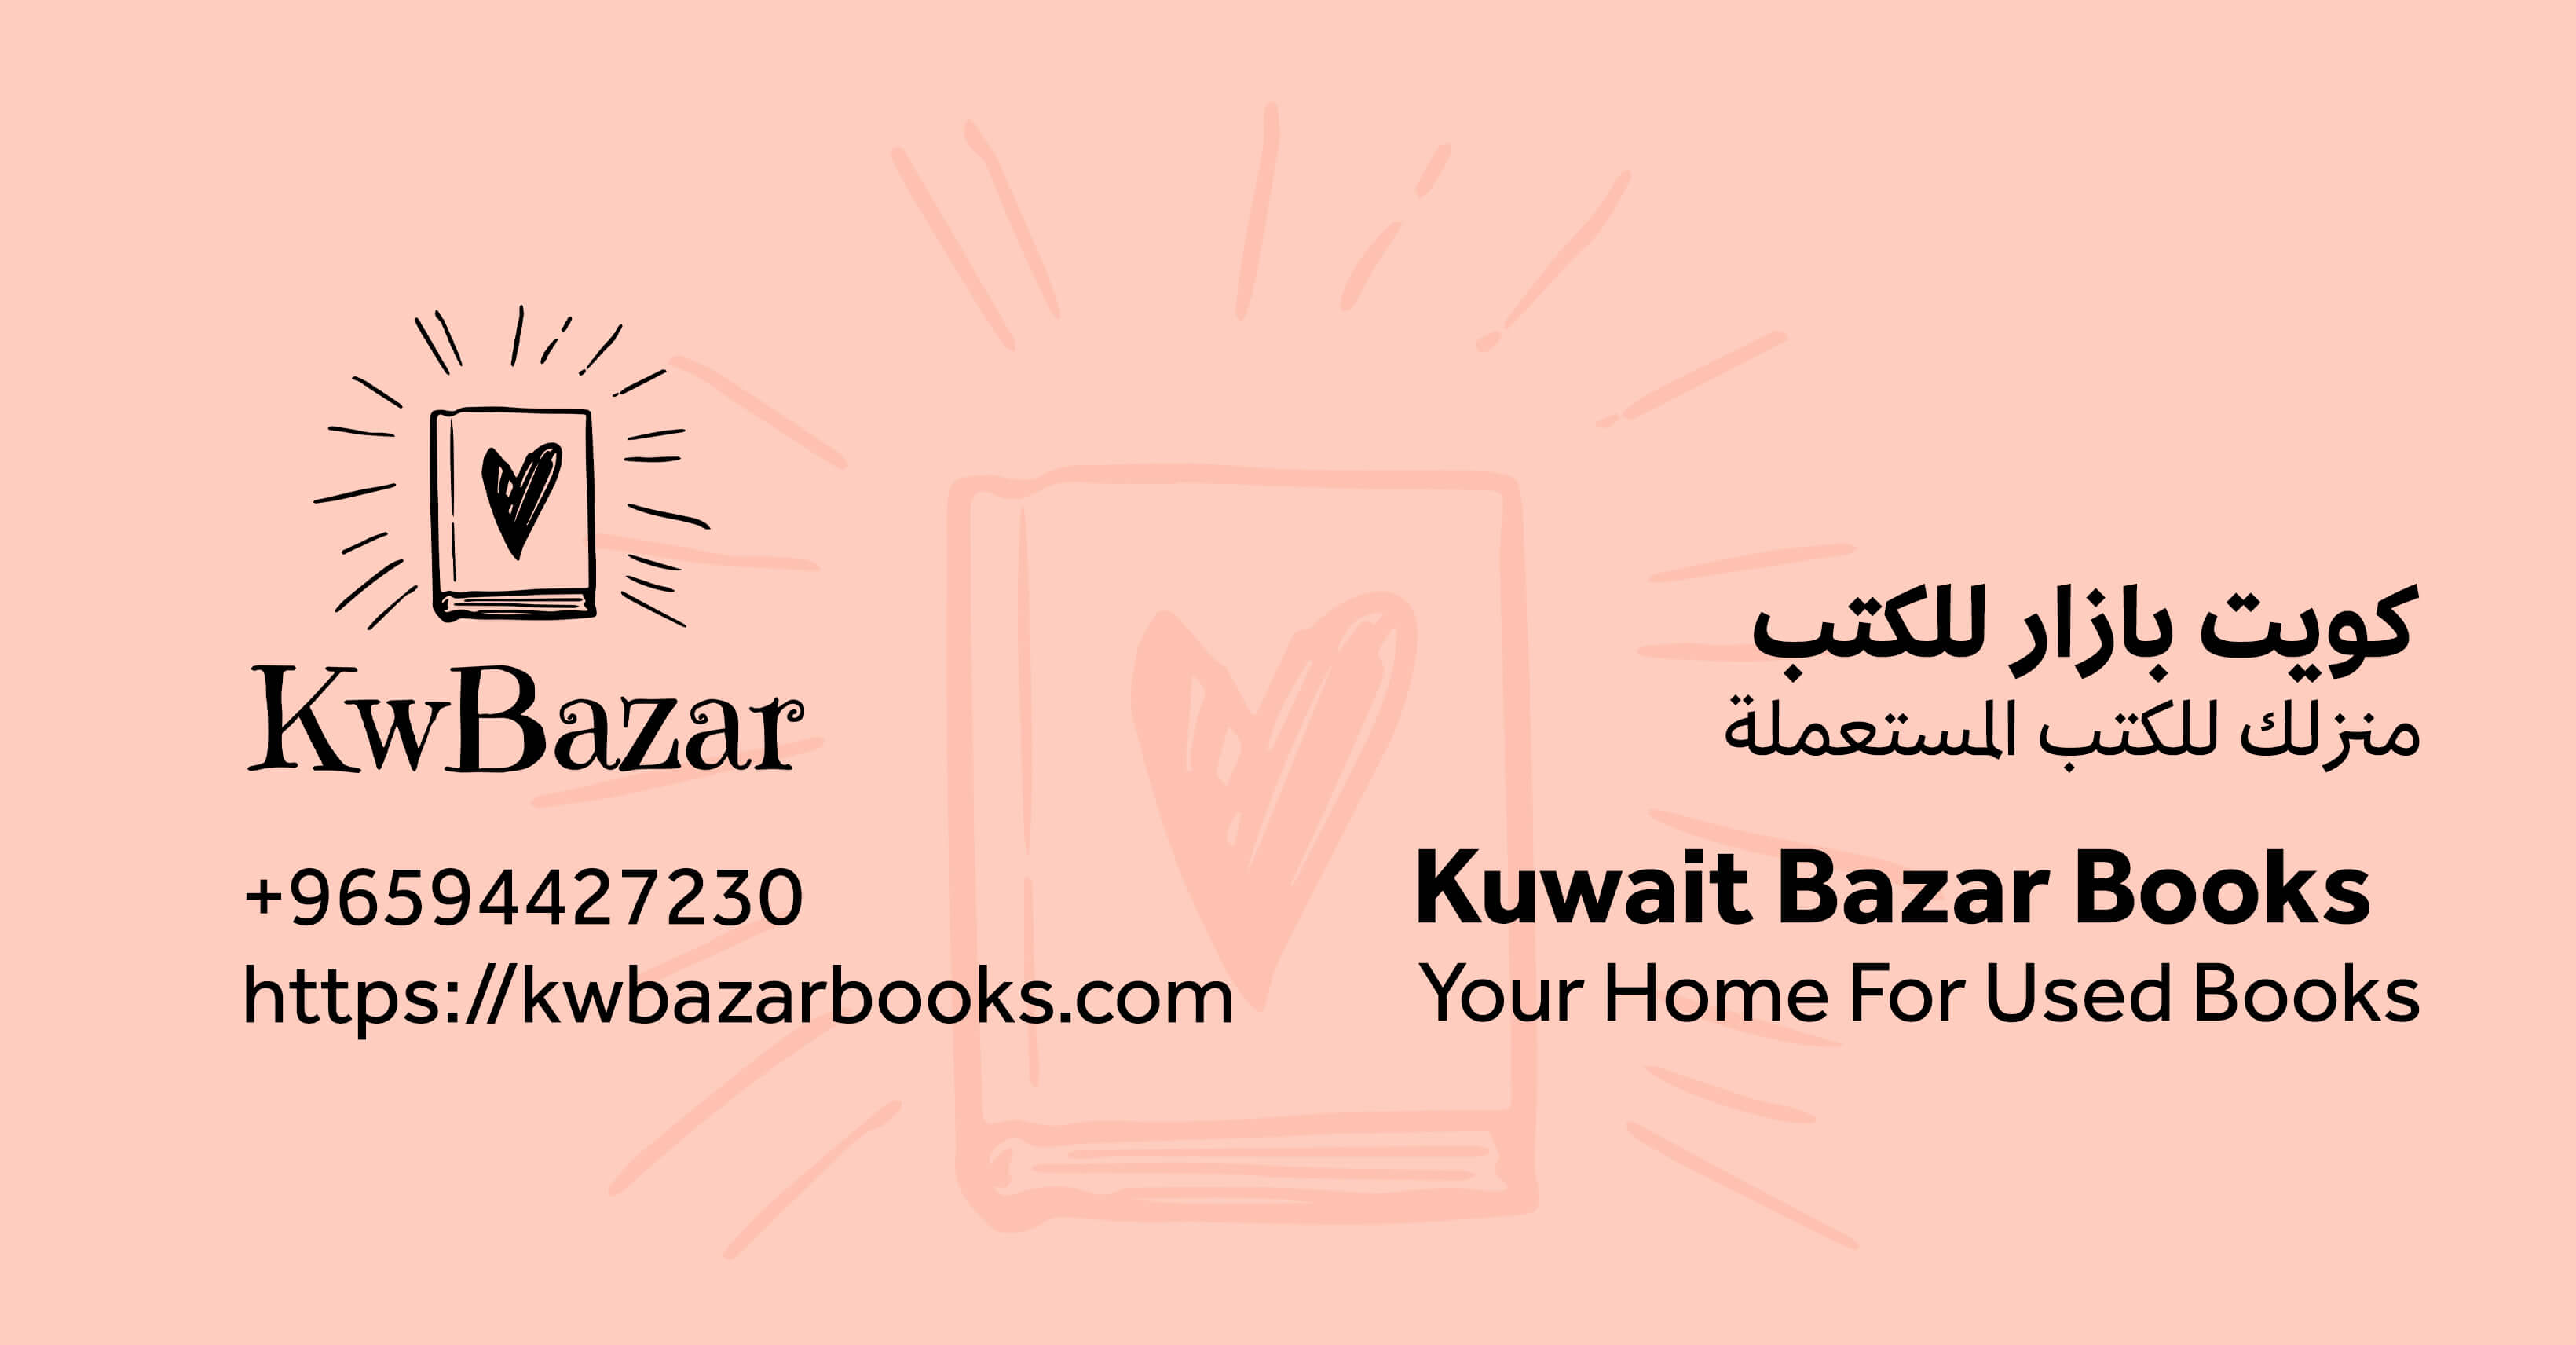 Kuwait Bazar Books